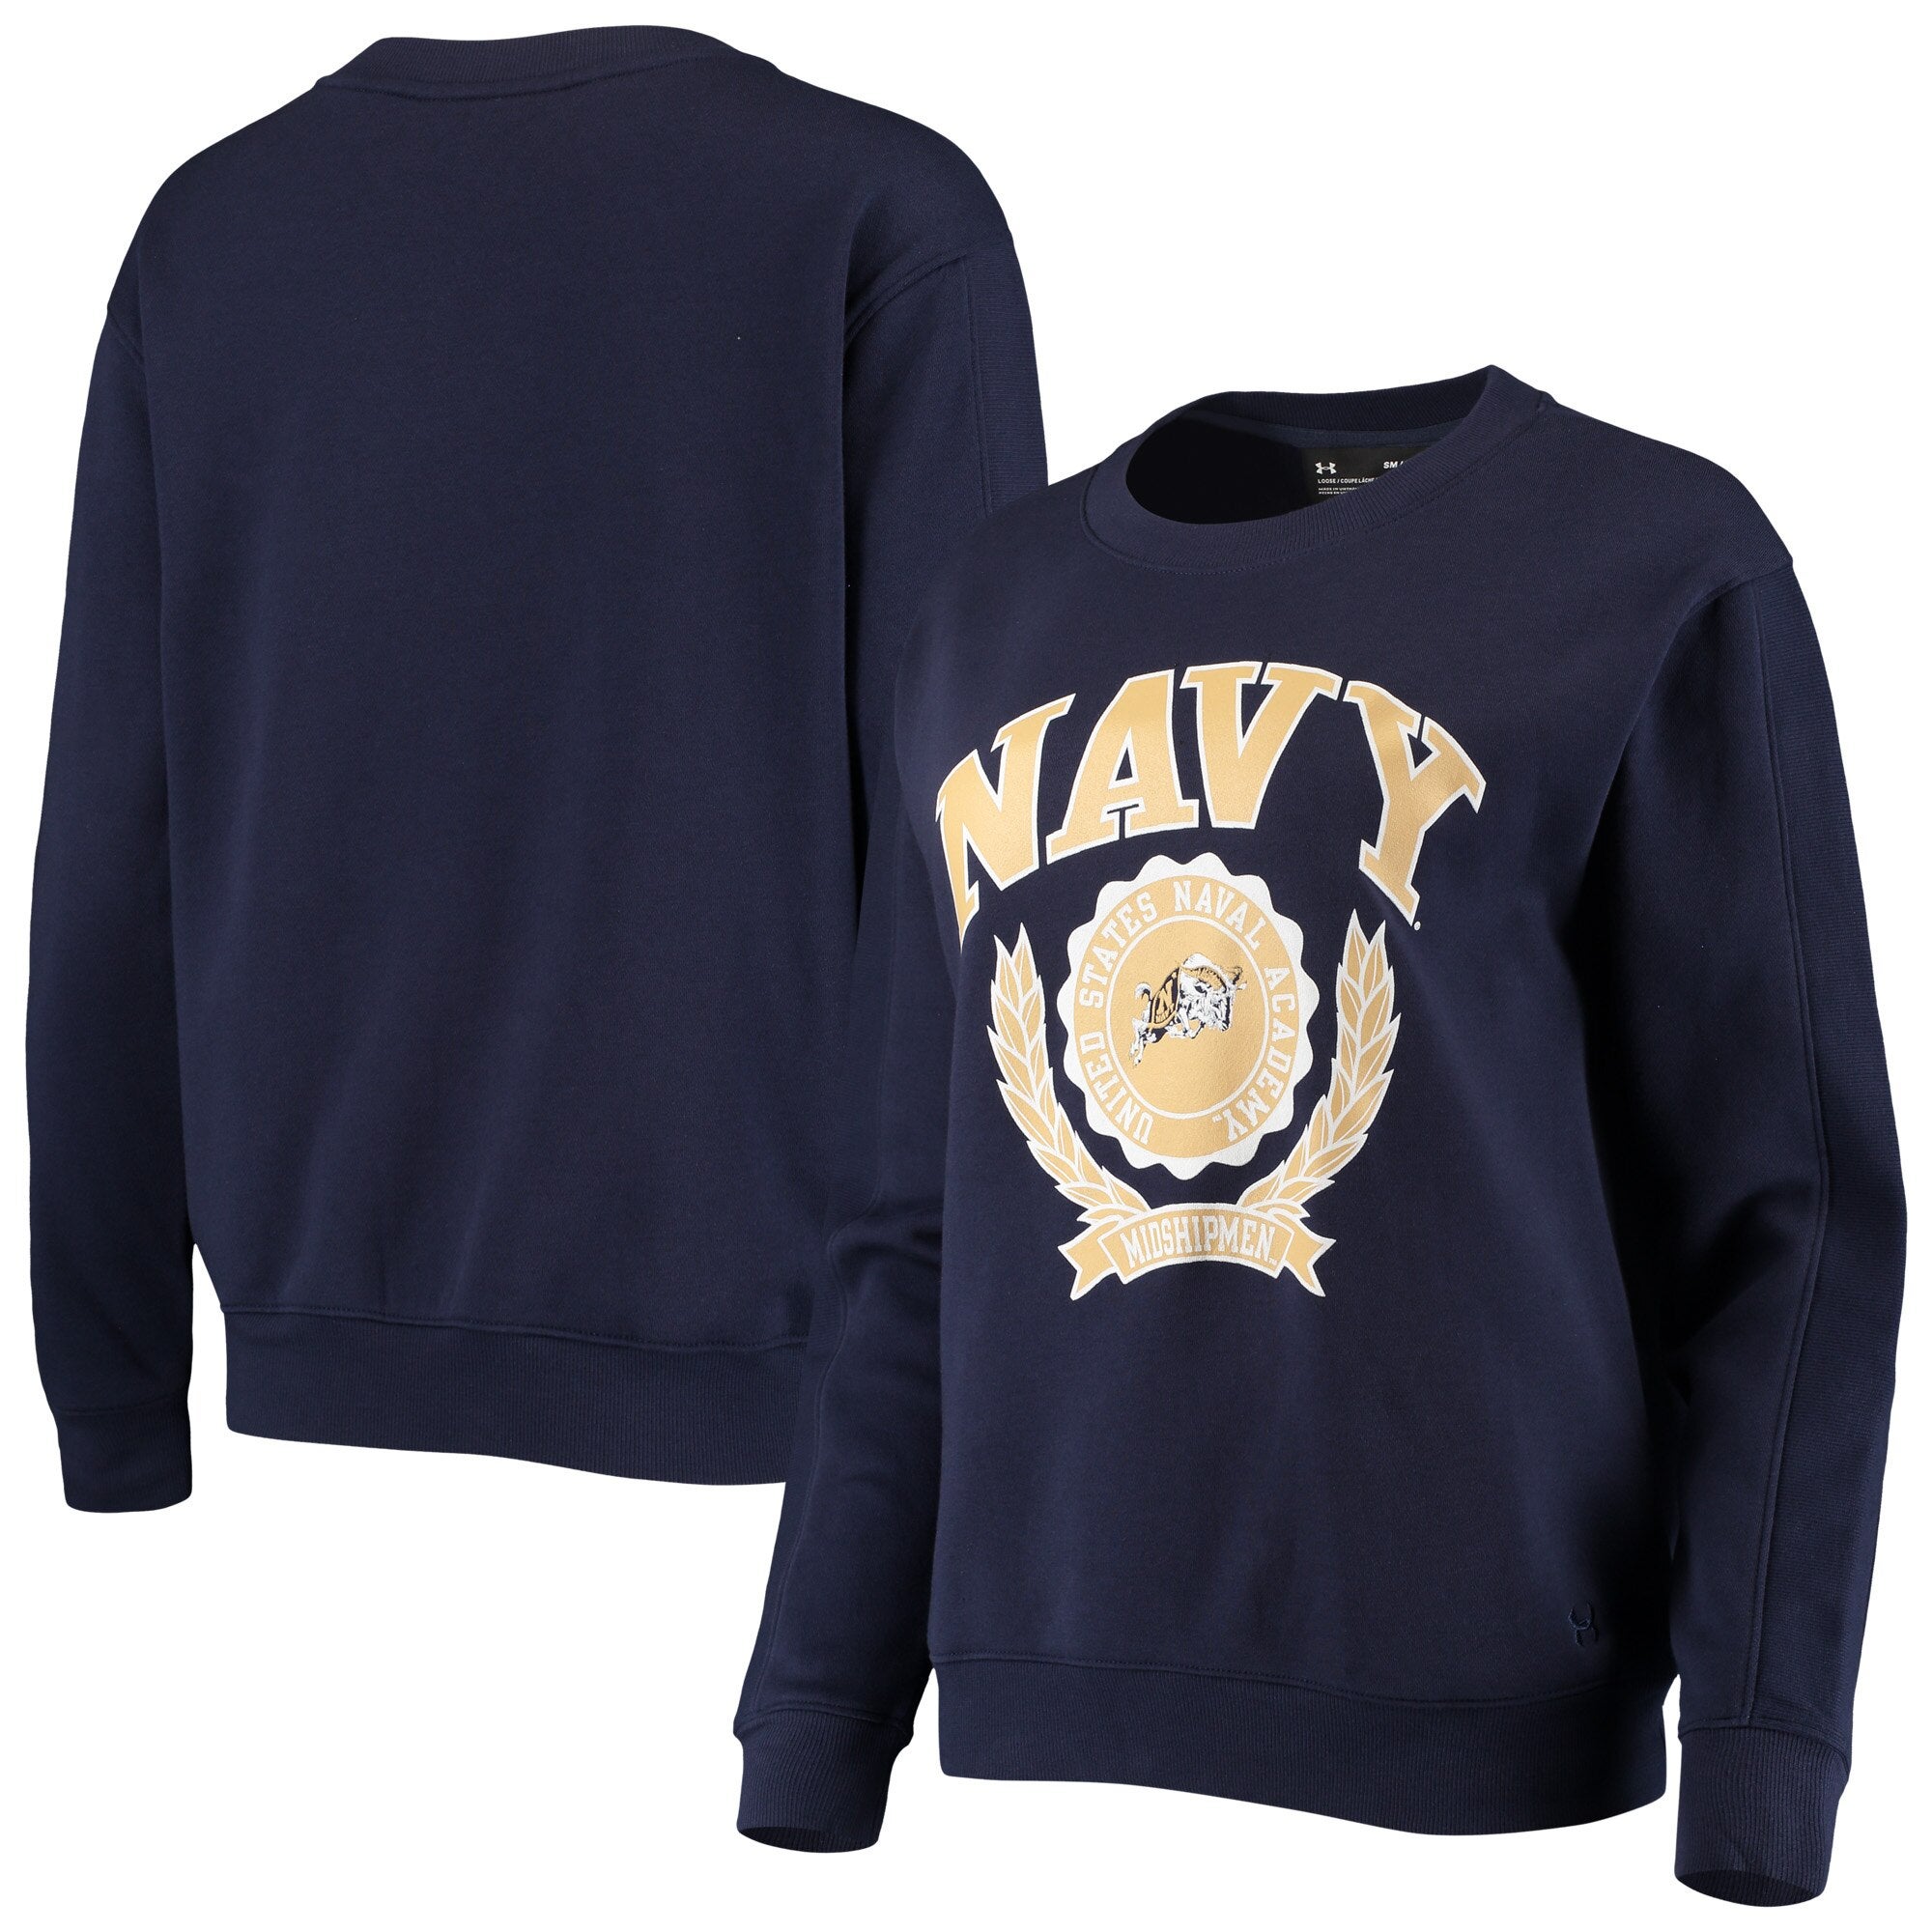 Under Armour Navy All Day Fleece Pullover Sweatshirt - Women's